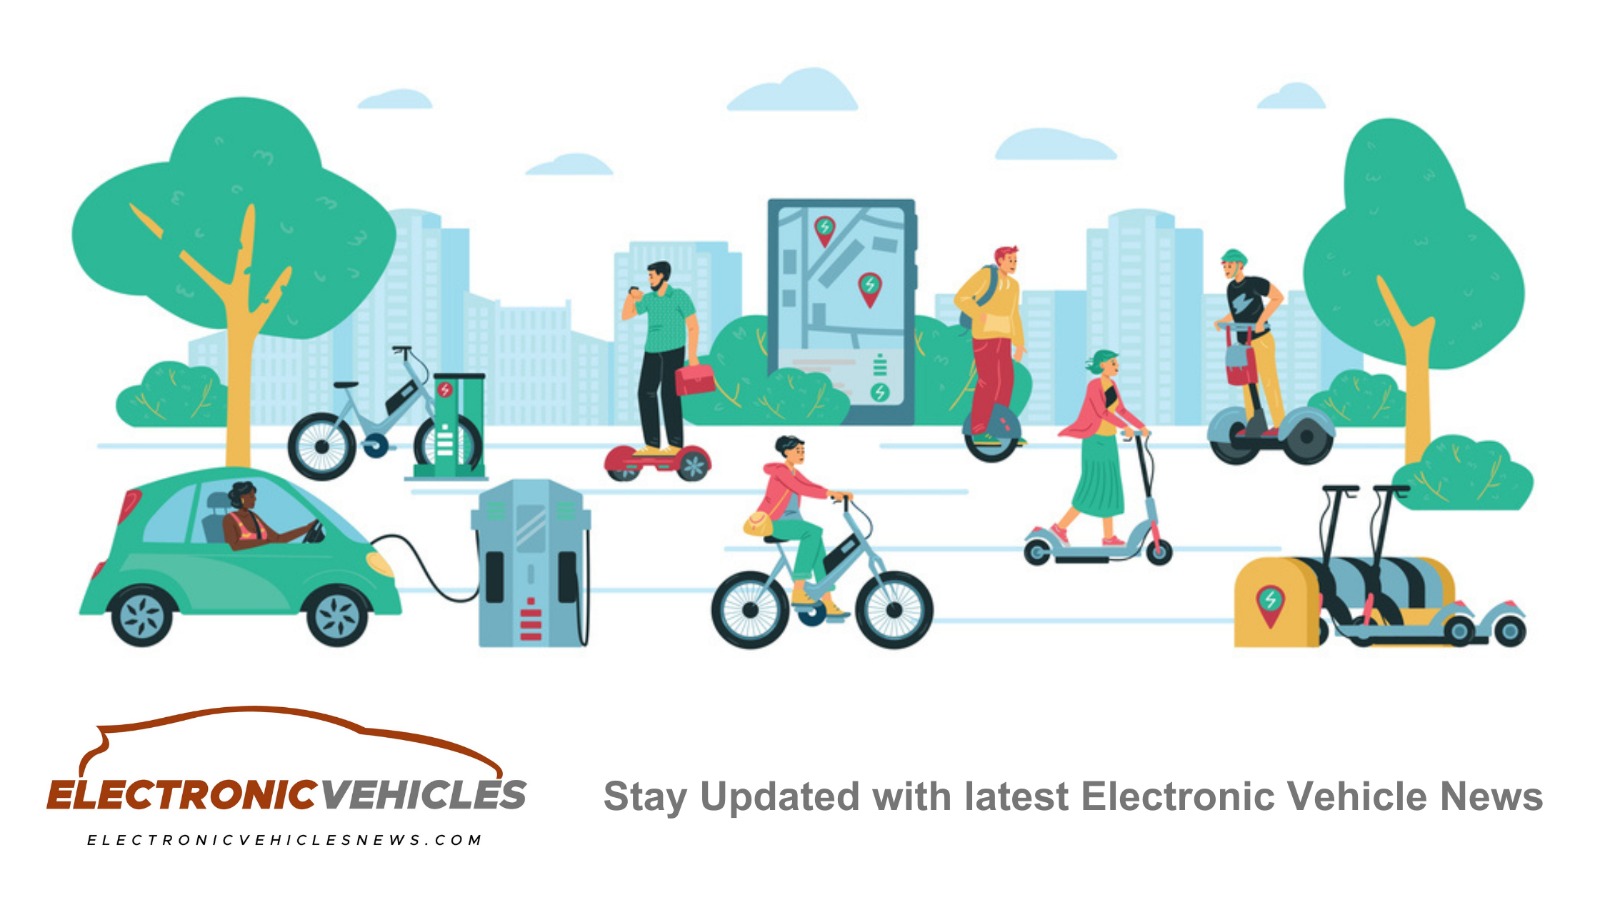 Electronic Vehicles News